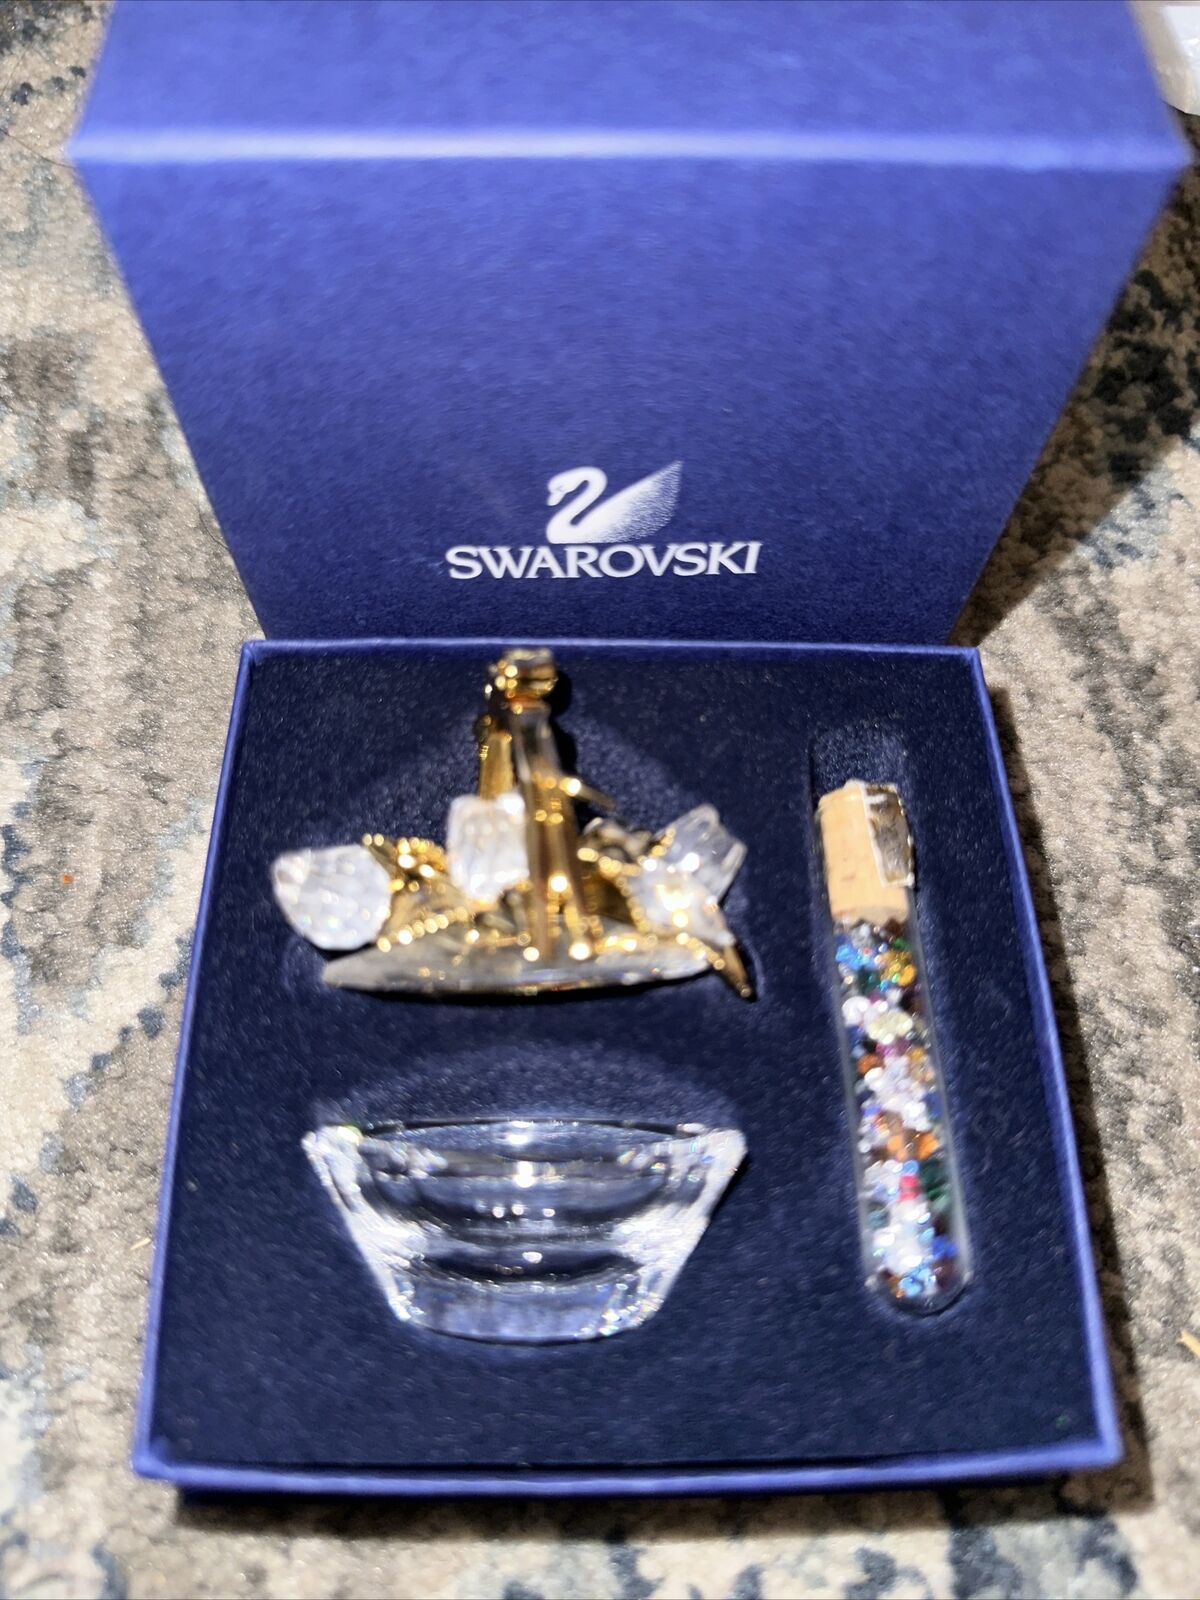 Swarovski Crystal Memories Secrets Flower Basket Box Made n Austria 9448 000 012